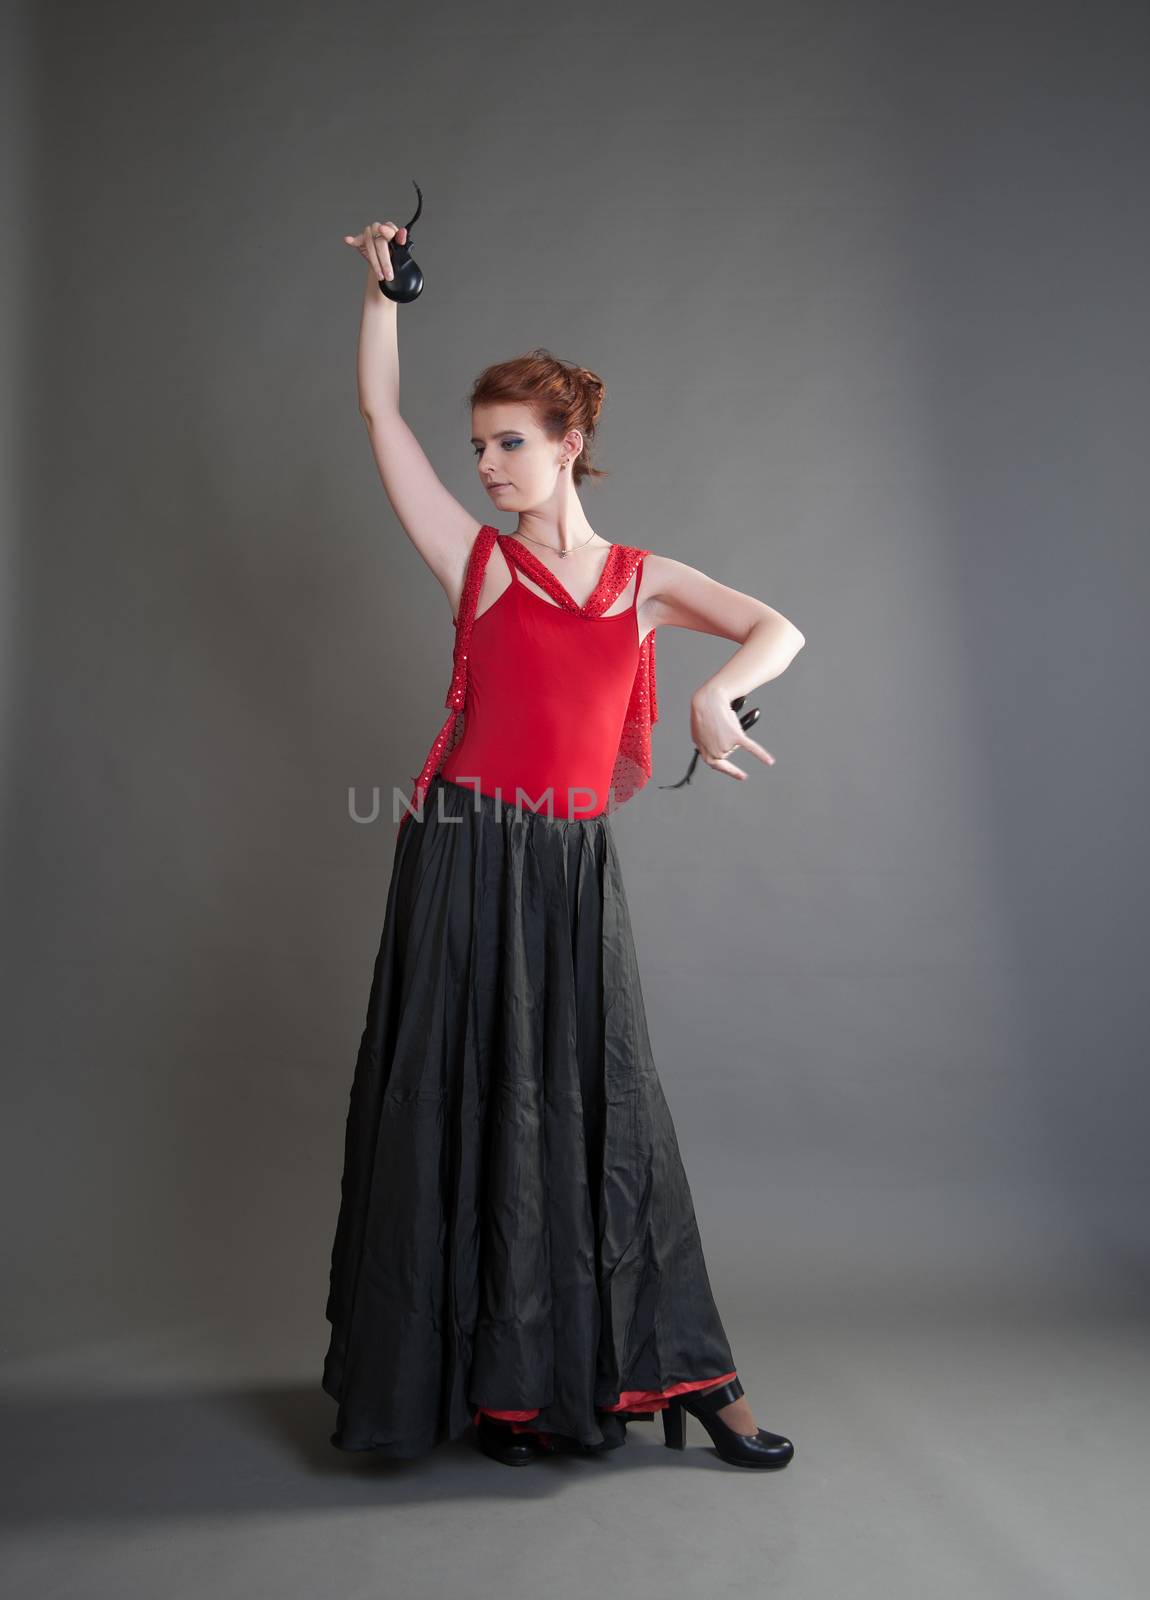 flamenco dancer swinging skirt on a grey background